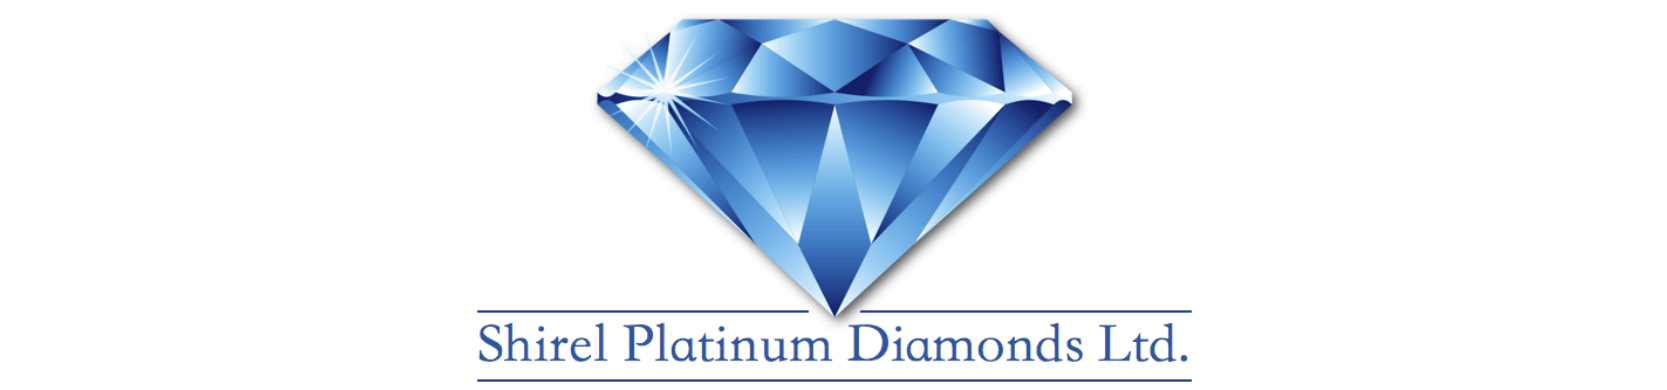 Shirel Platinum Diamonds